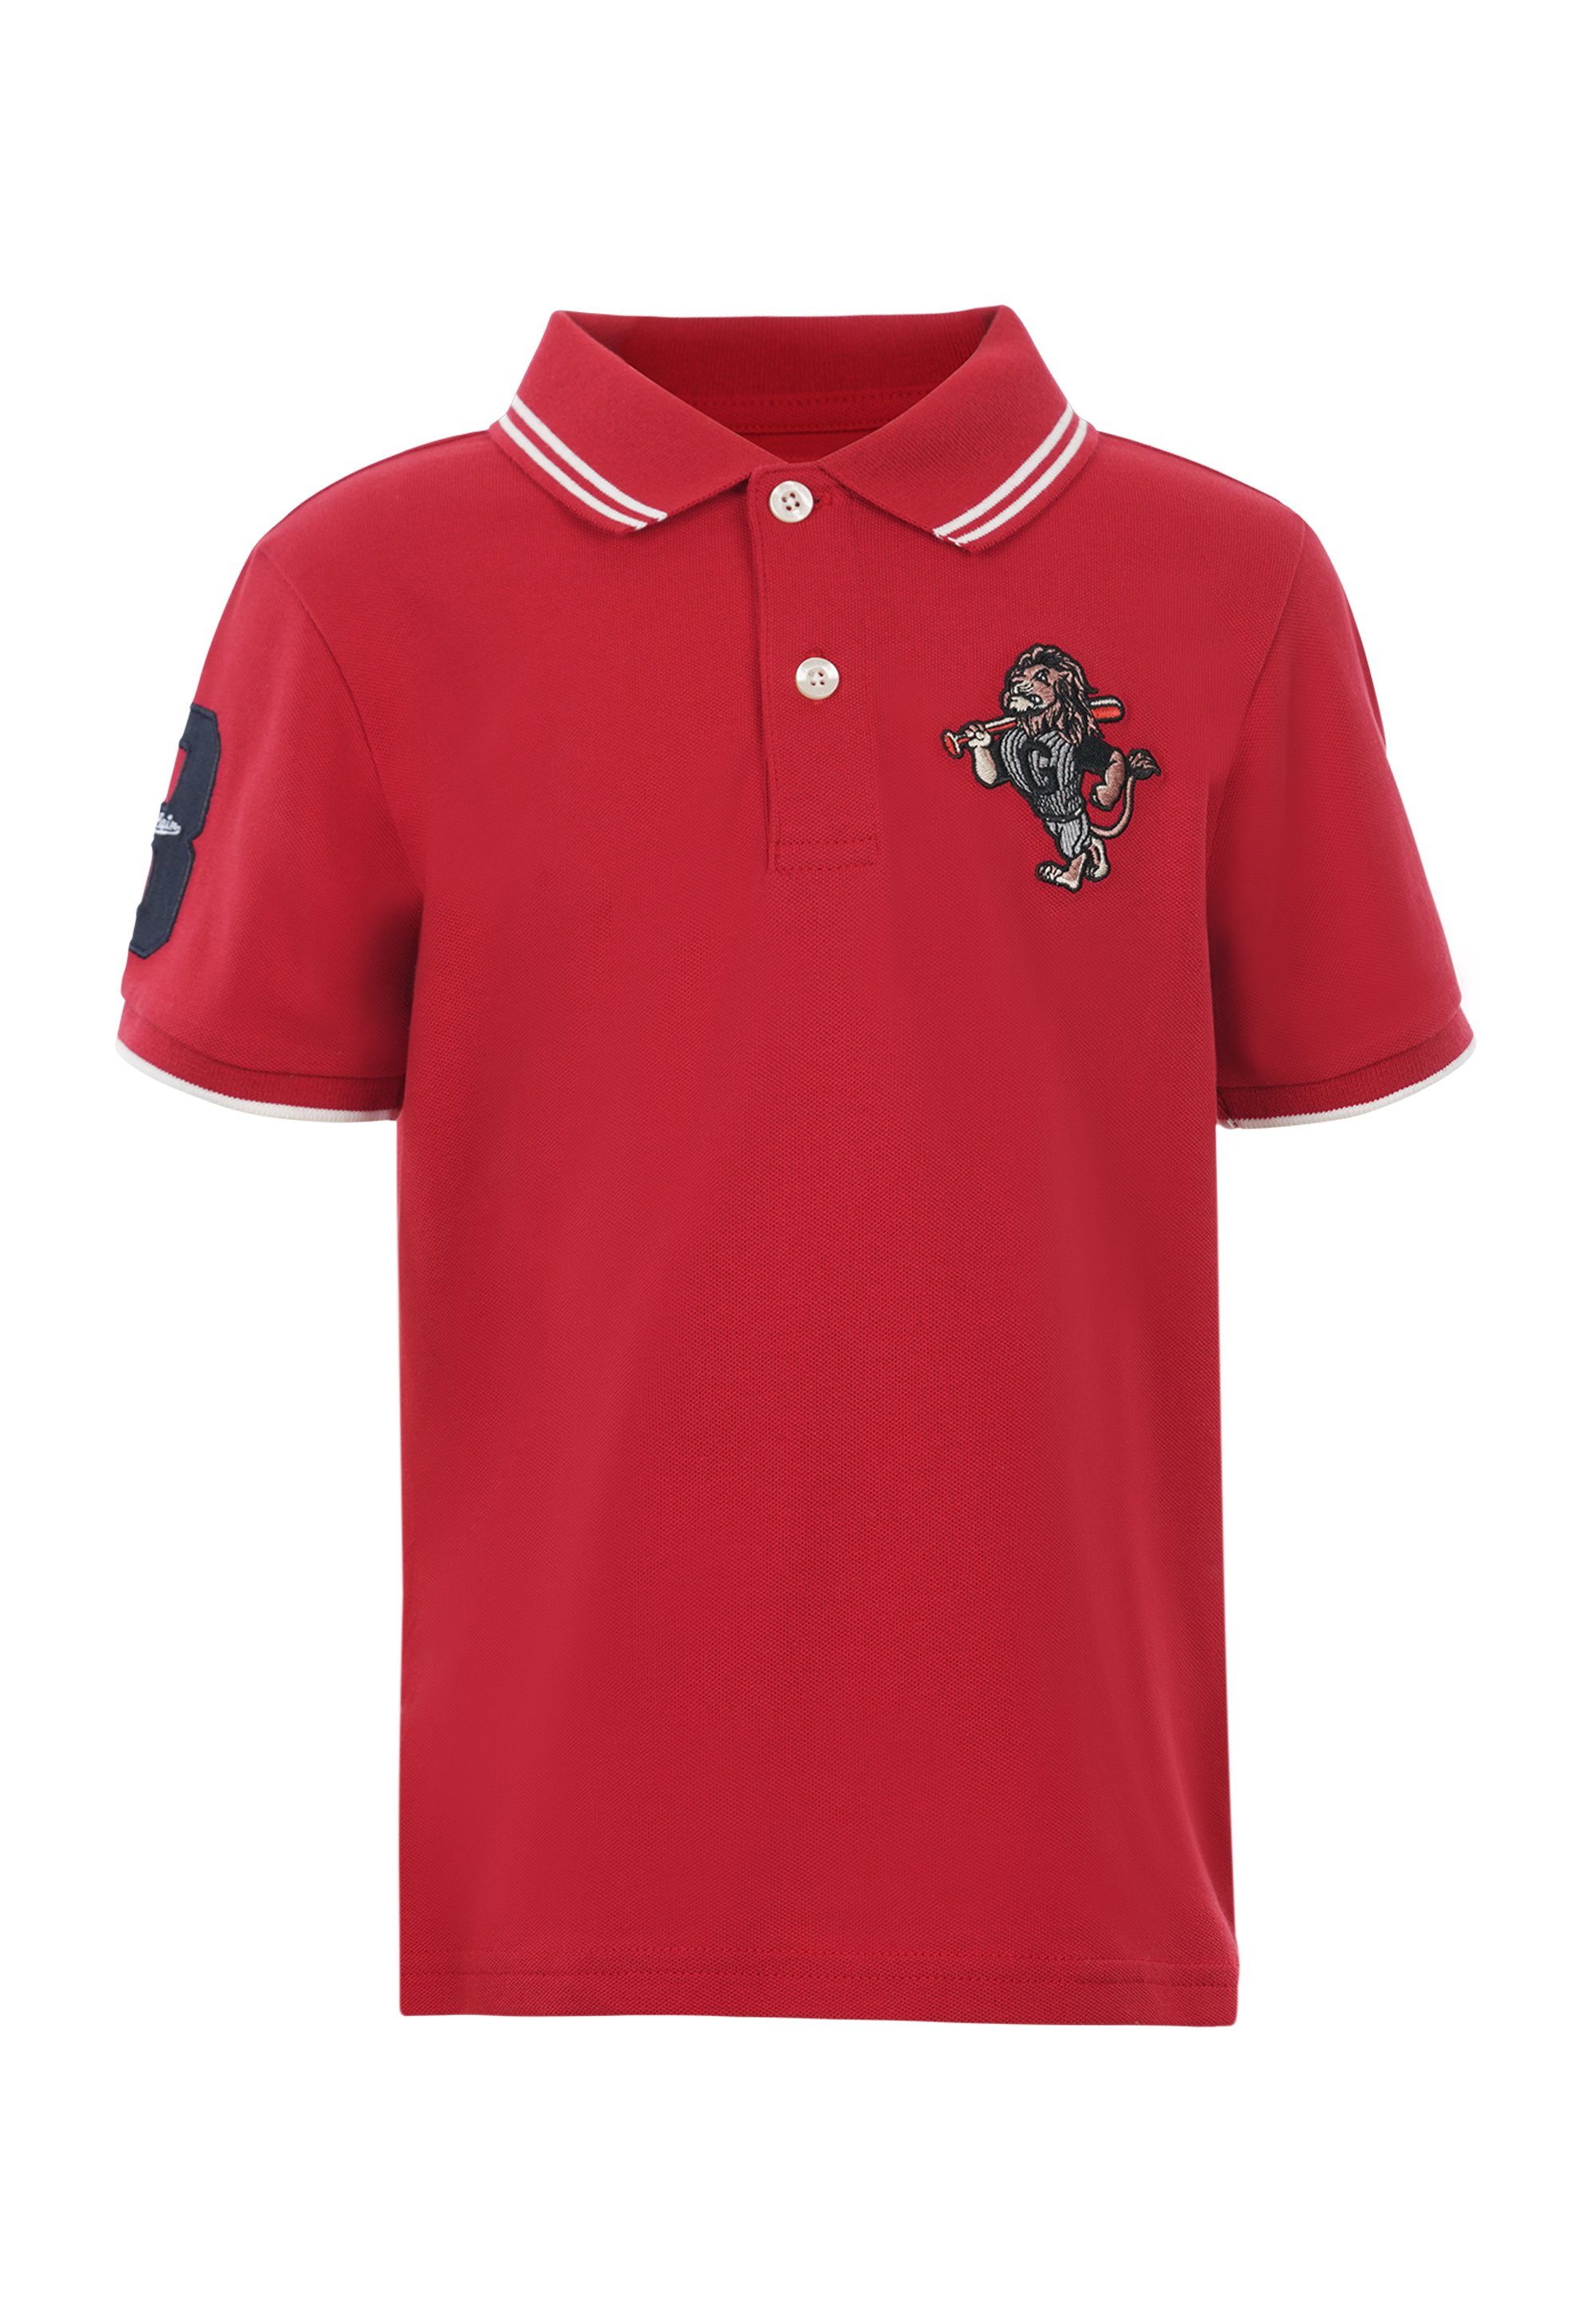 GIORDANO junior Poloshirt Retro Comic Style mit toller Löwen-Stickerei rot